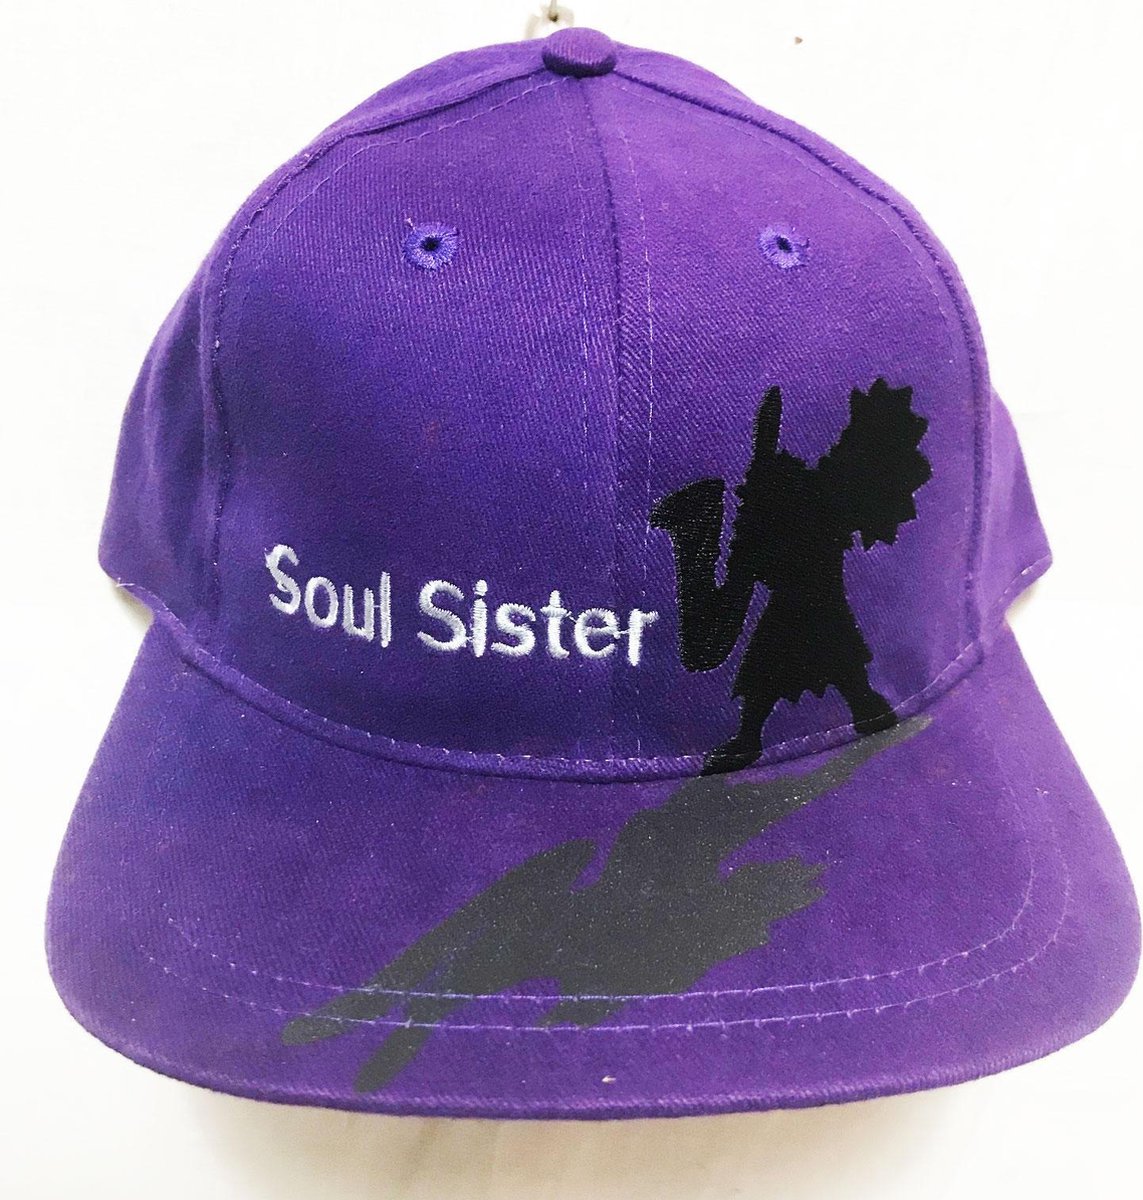 The Simpsons Soul Sister Silhouette Cap - Pet